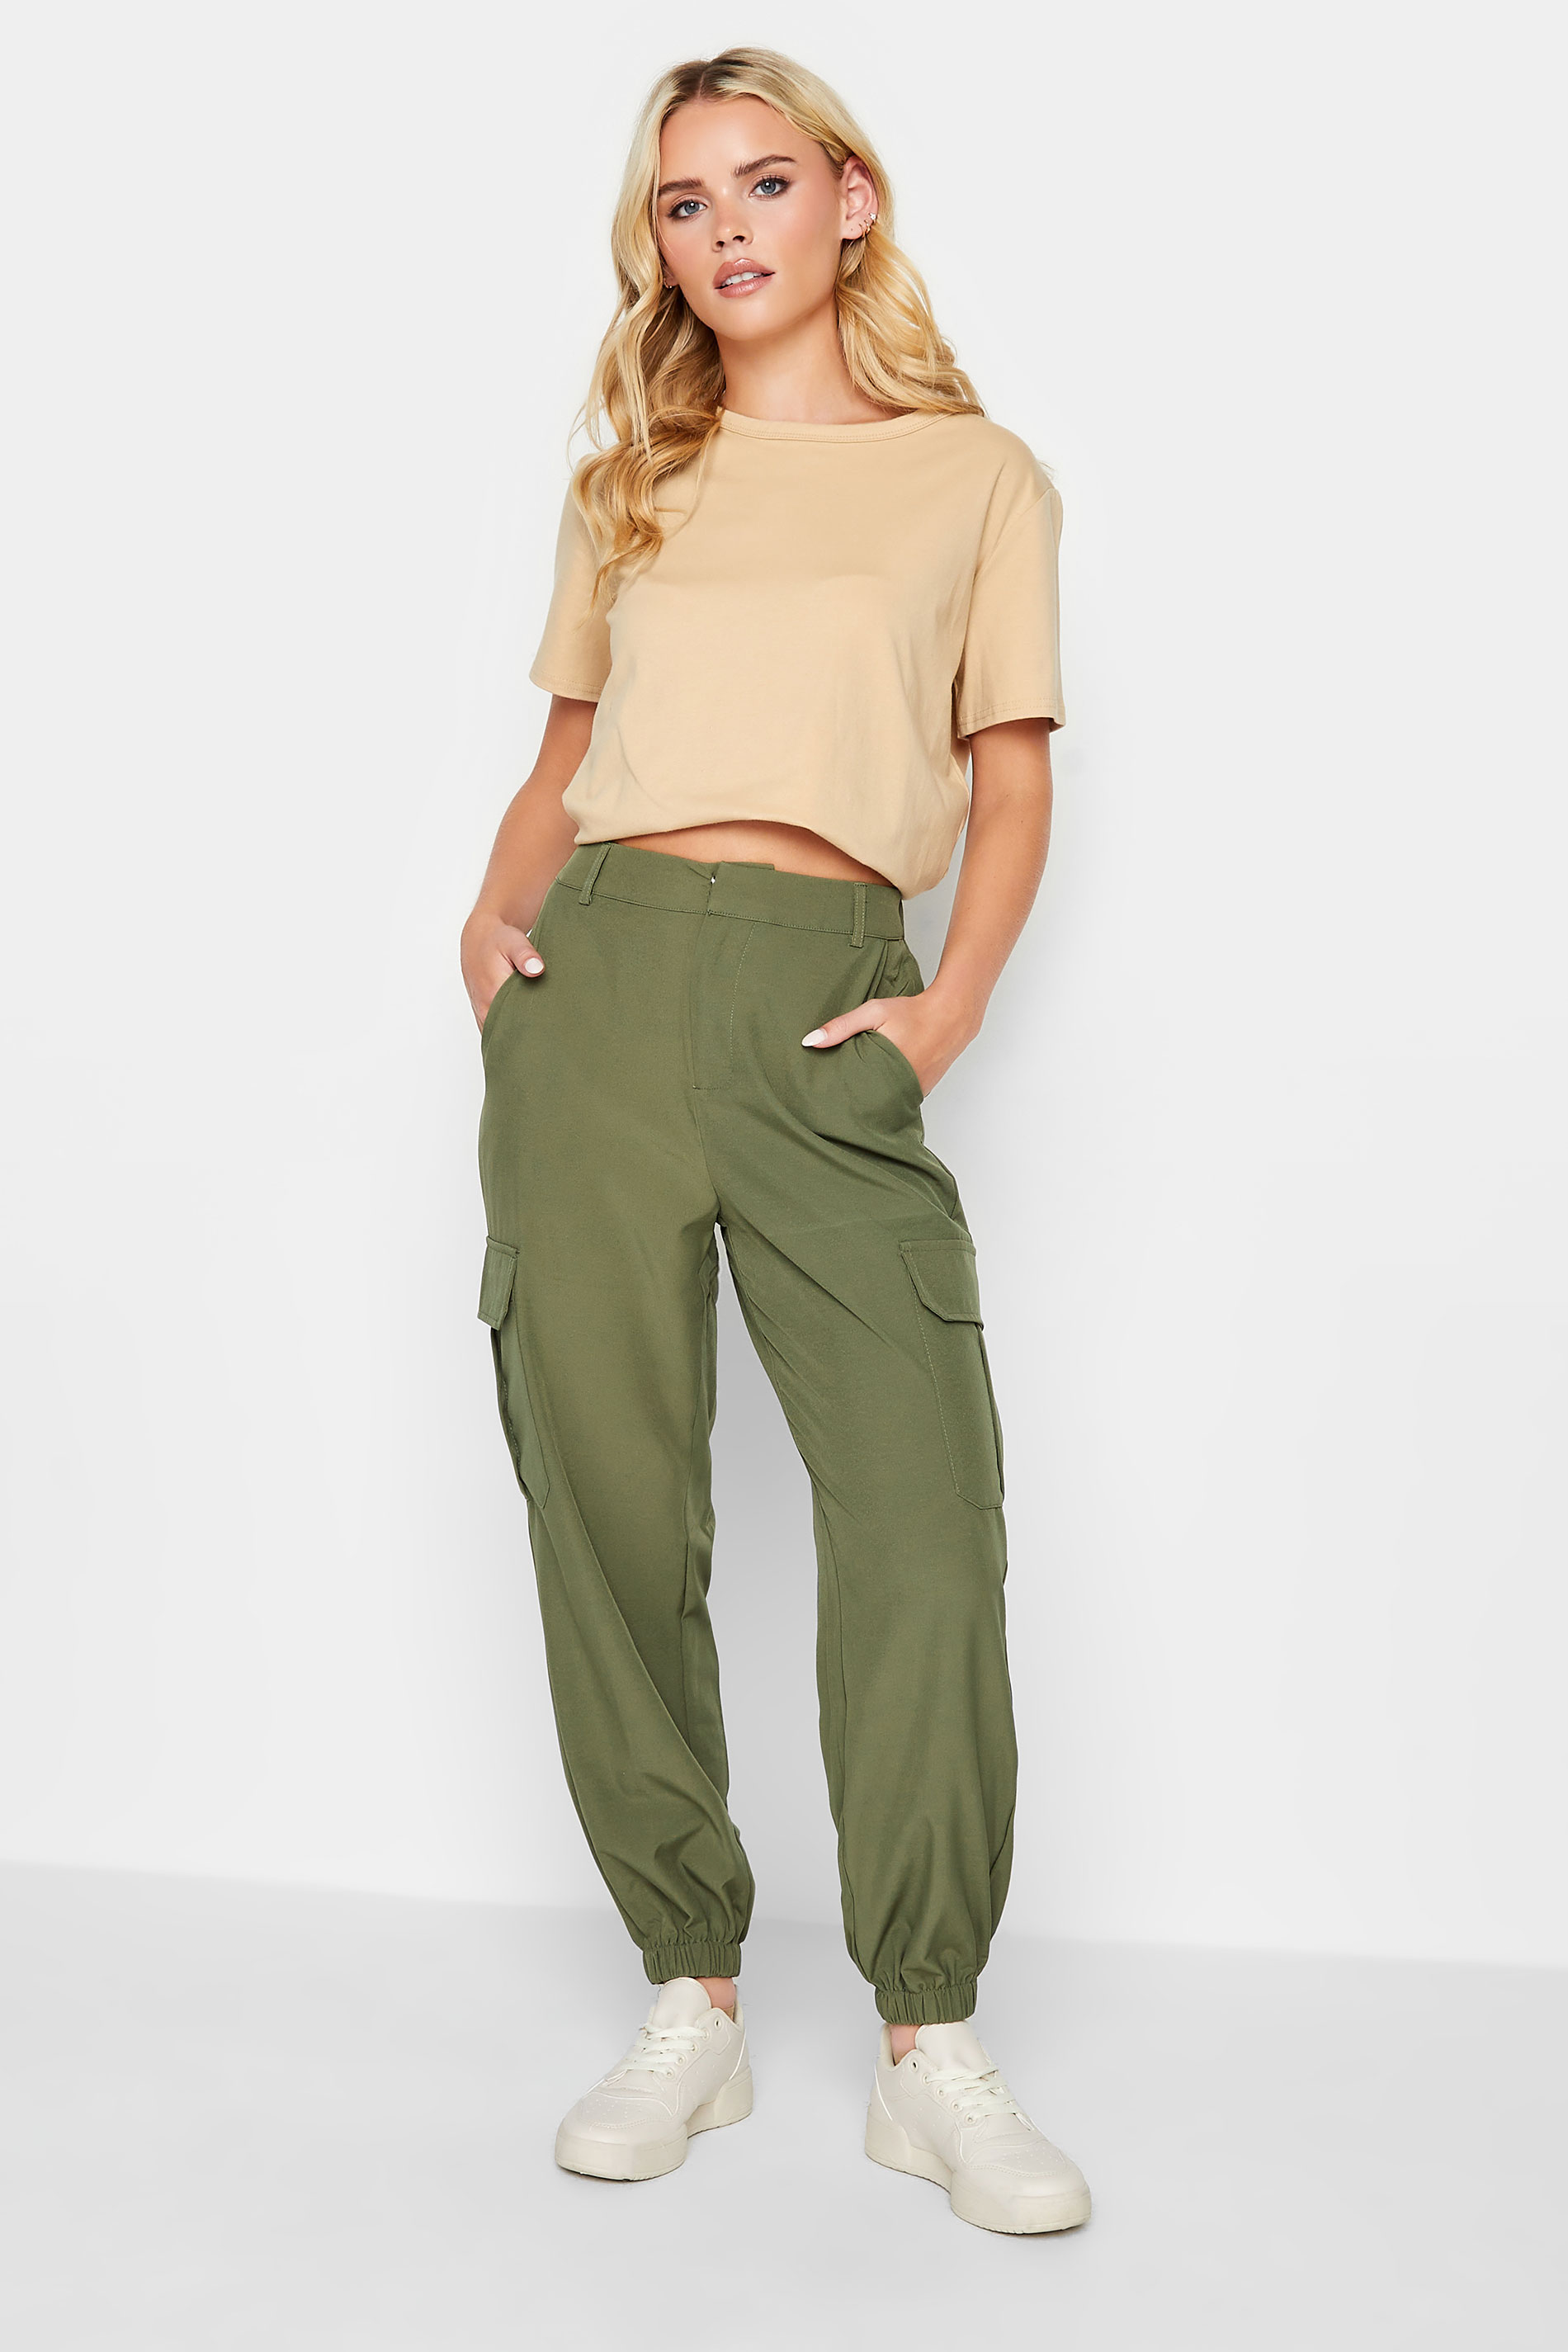 Buy Khaki Green Linen Blend Cargo Trousers from Next